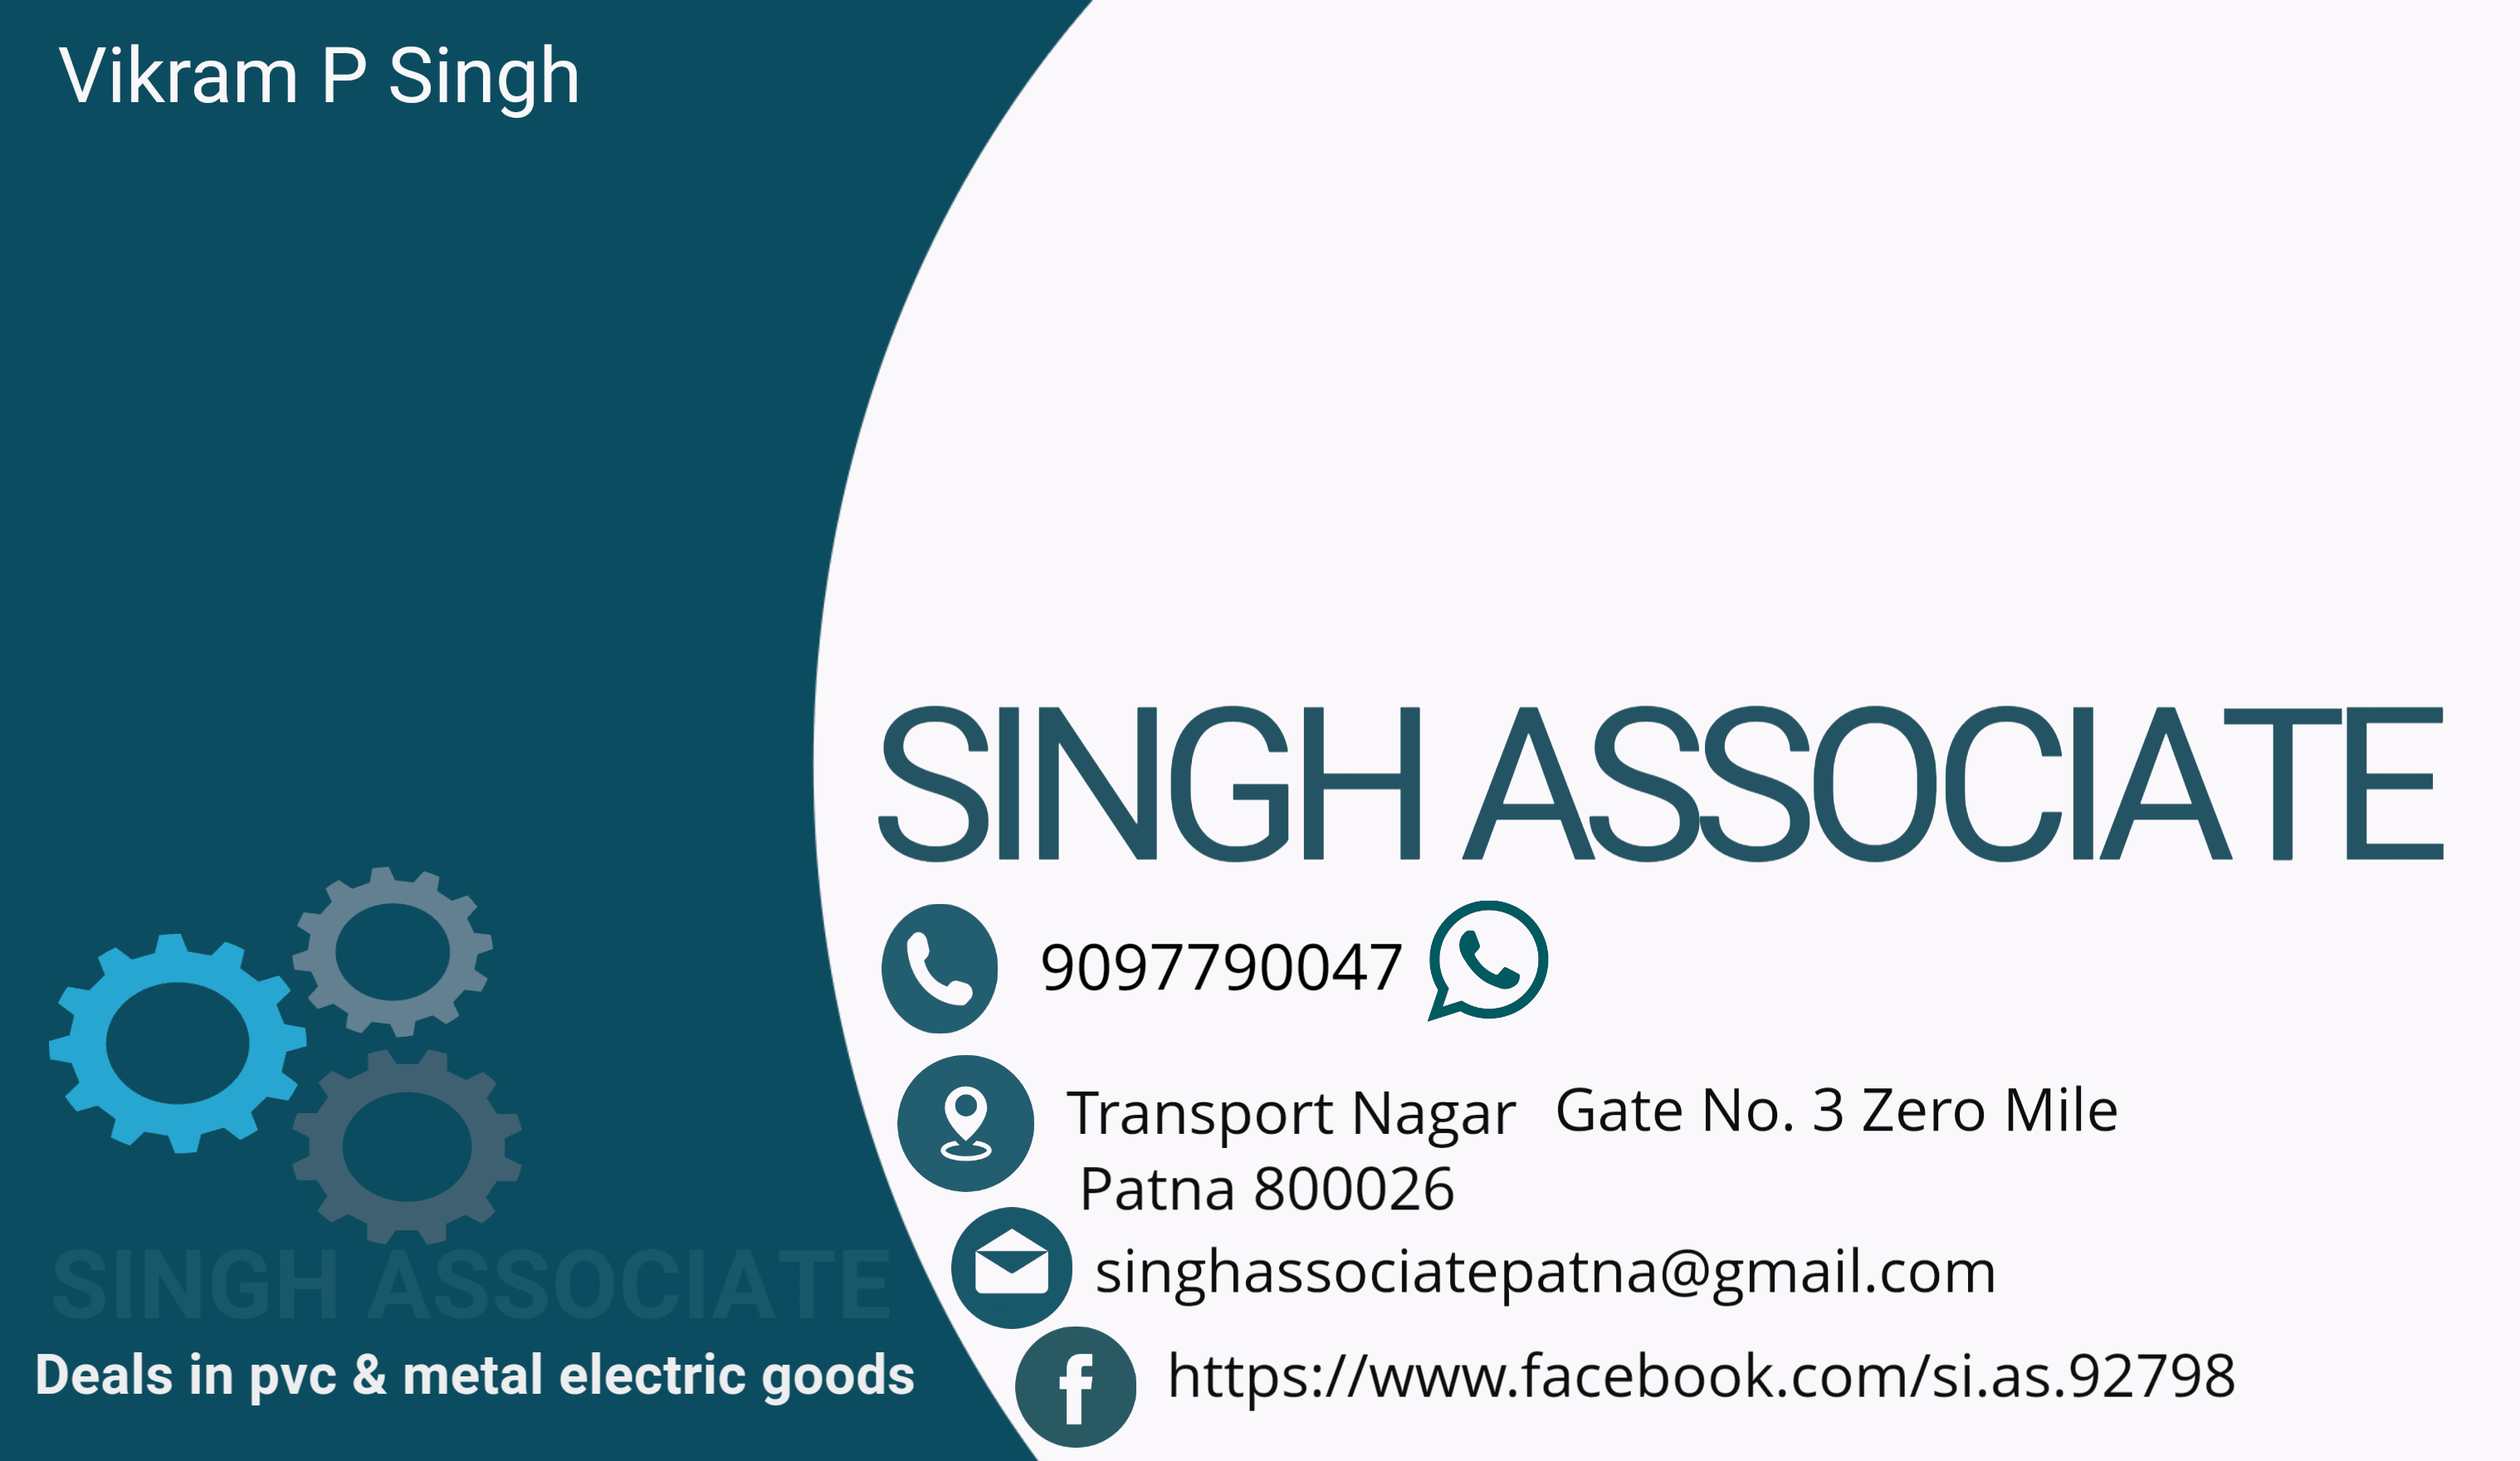 Singh Associate